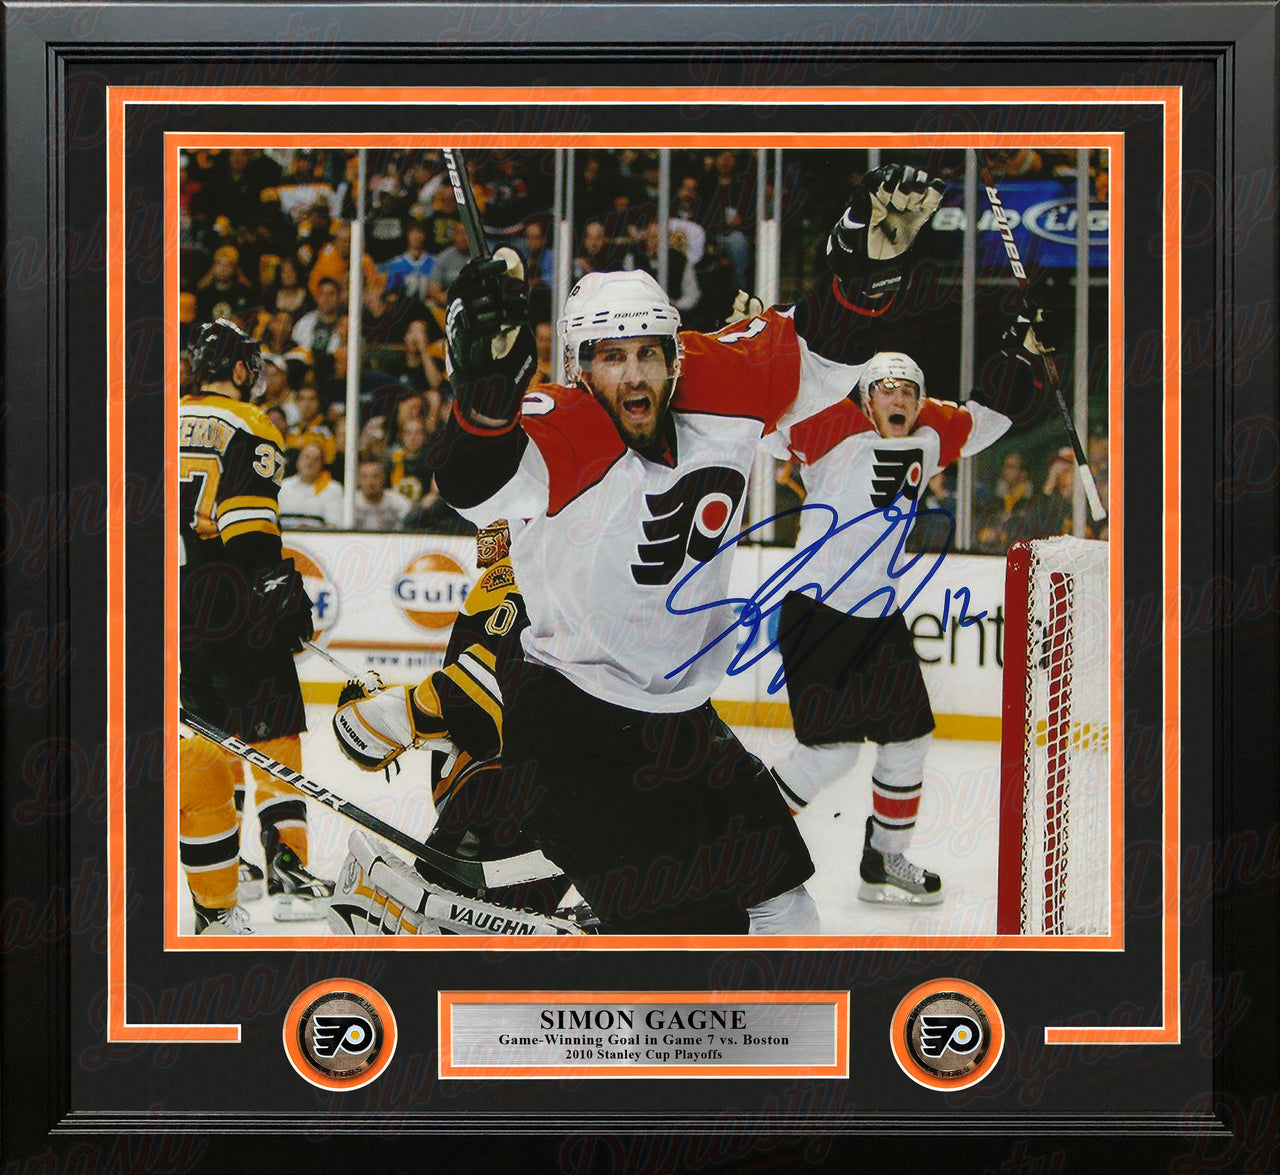 Simon Gagne Philadelphia Flyers Gm 7 Game-Winning Goal v Bruins Autographed 8x10 Framed Color Photo